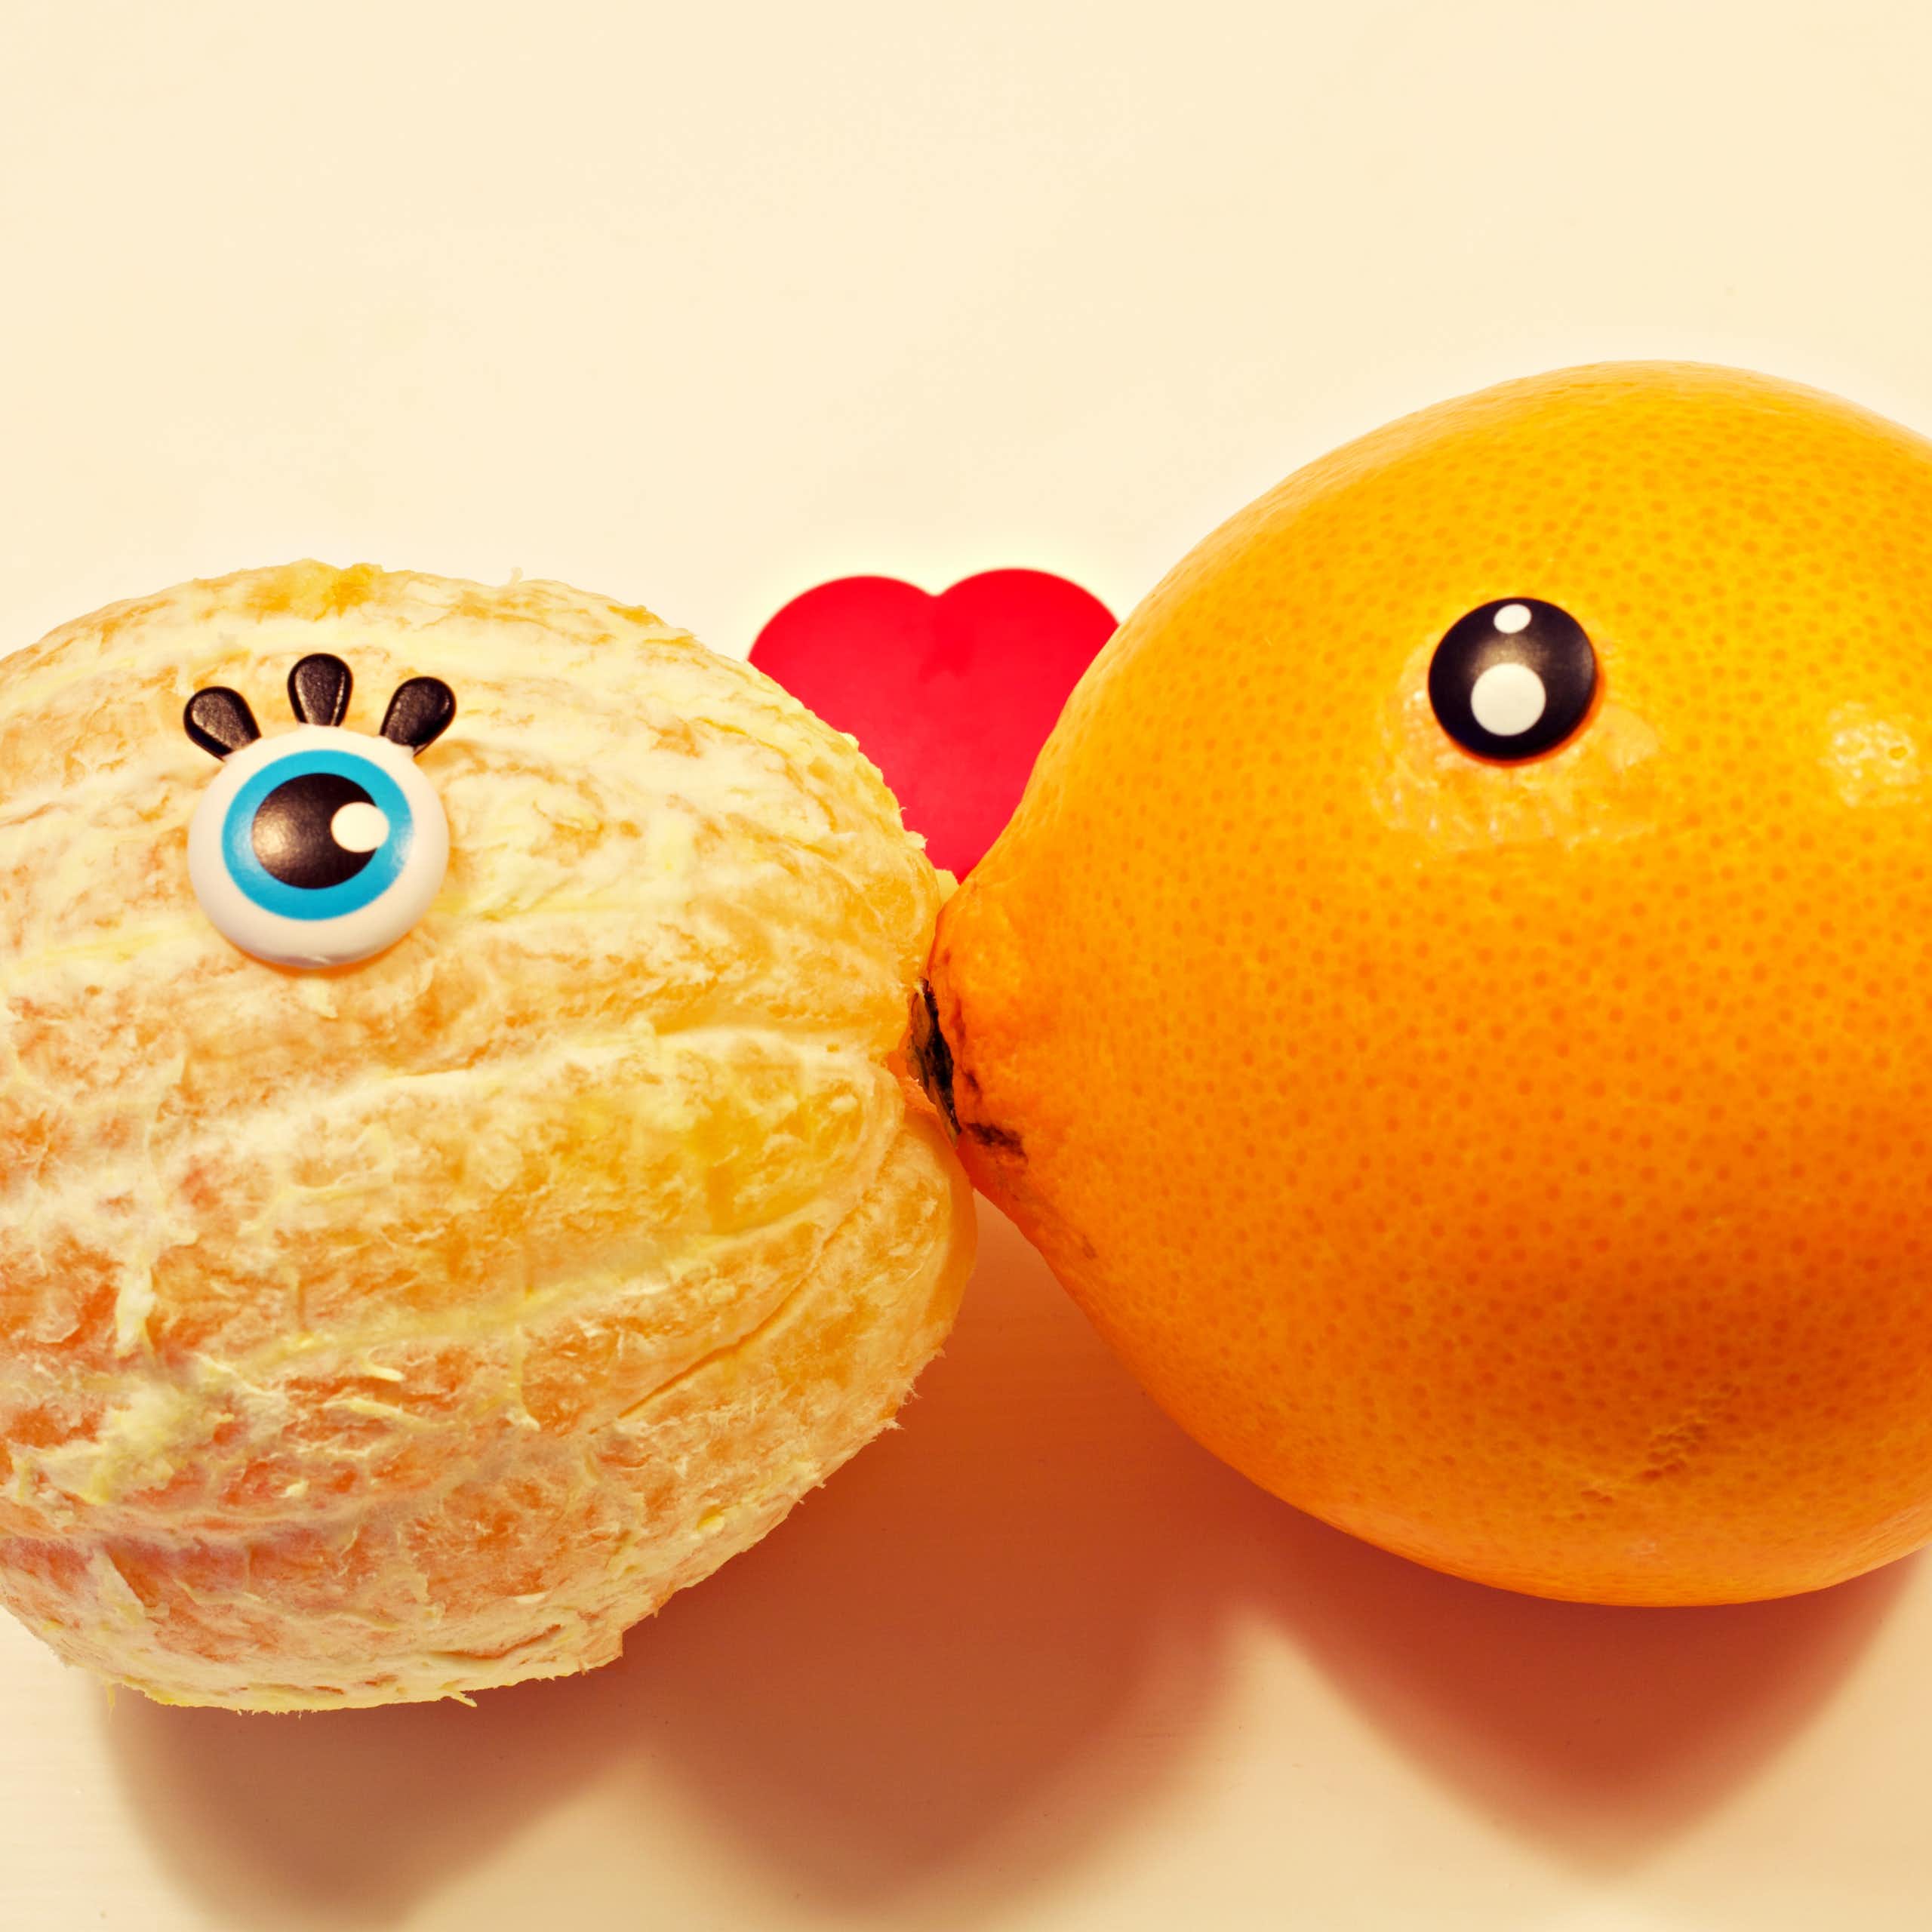 A peeled and an unpeeled orange kiss.